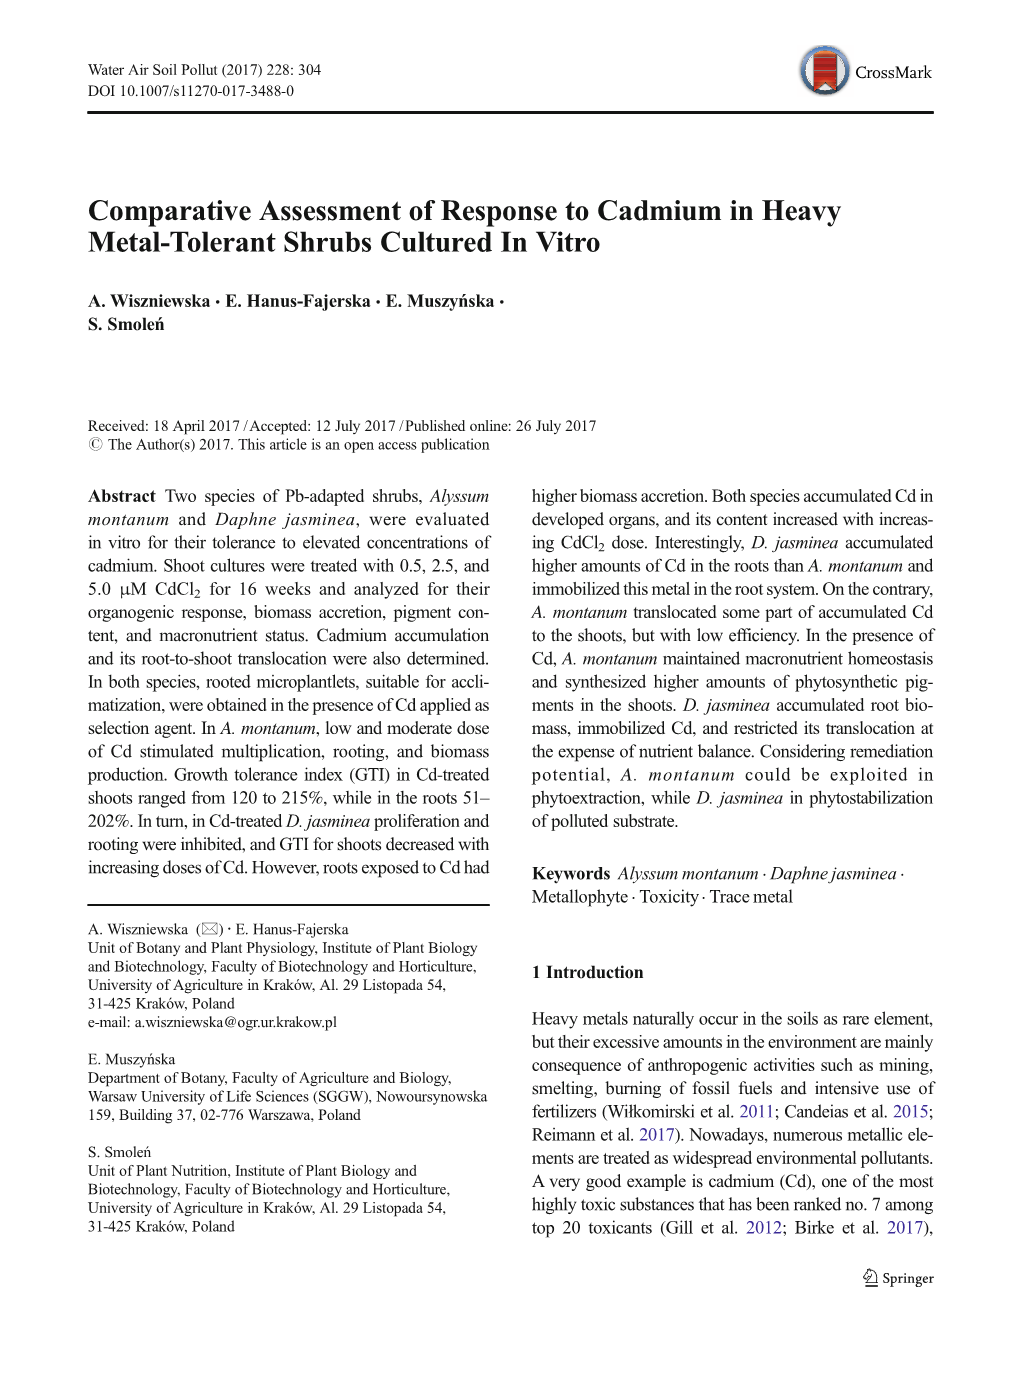 Comparative Assessment of Response to Cadmium in Heavy Metal-Tolerant Shrubs Cultured in Vitro